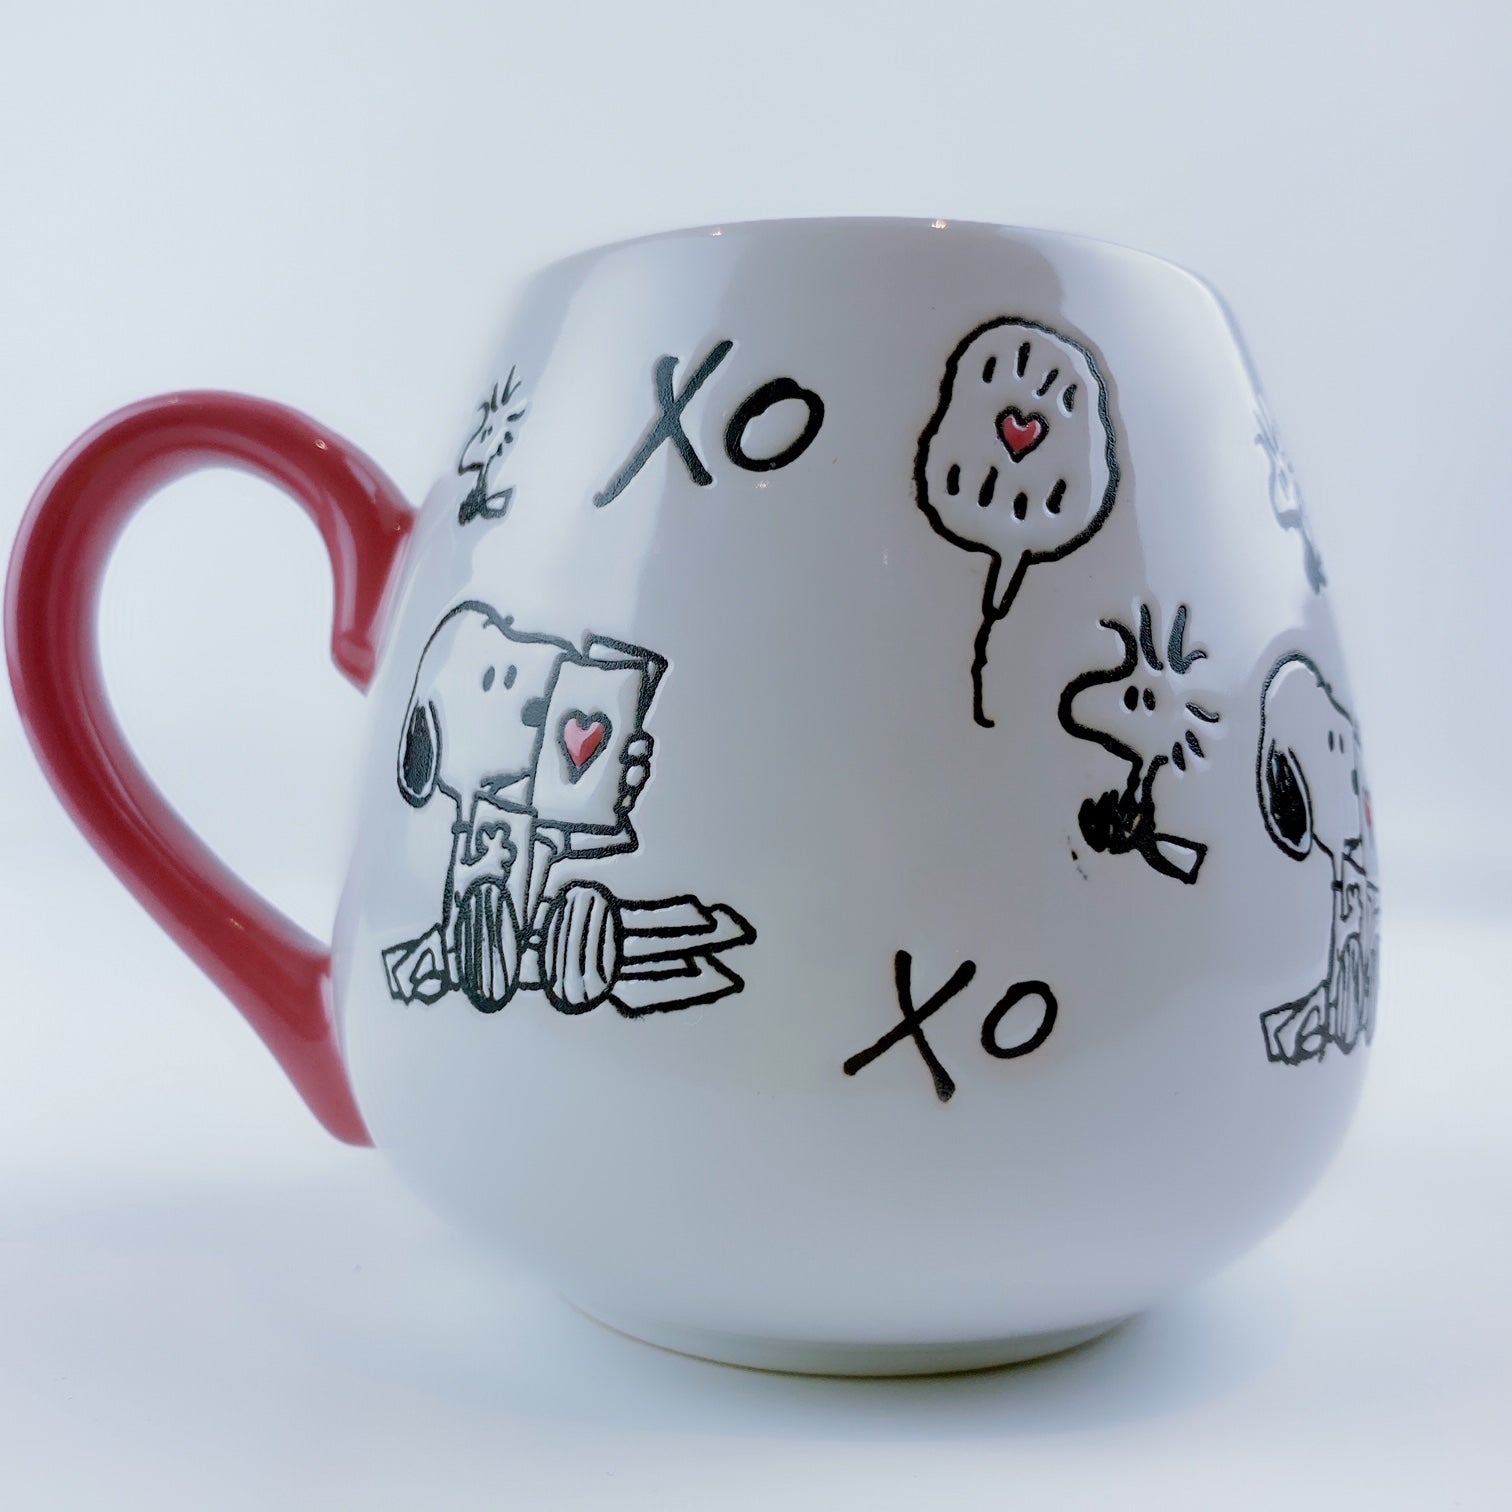 Ceramic Paint: Mugs (+ free coffee/hot chocolate)